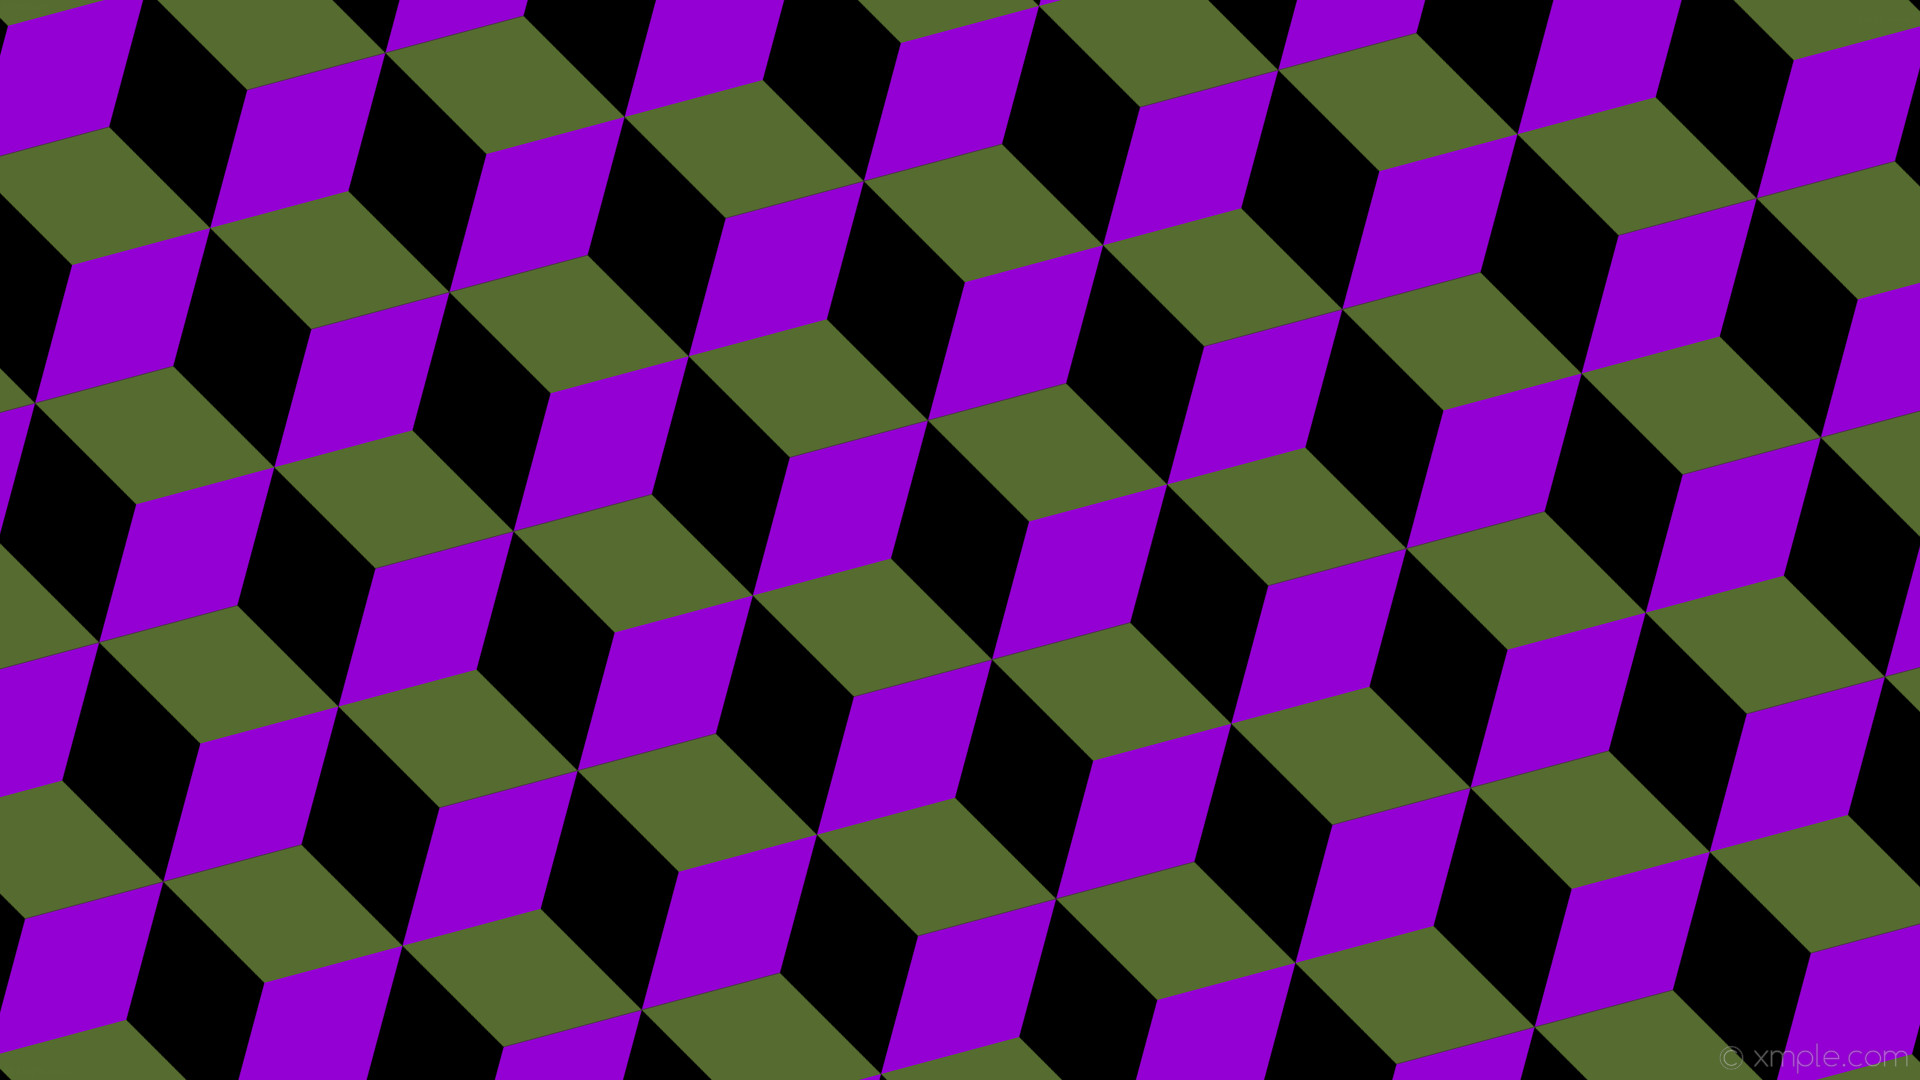 1920x1080 wallpaper purple 3d cubes green black dark violet dark olive green #000000  #9400d3 #